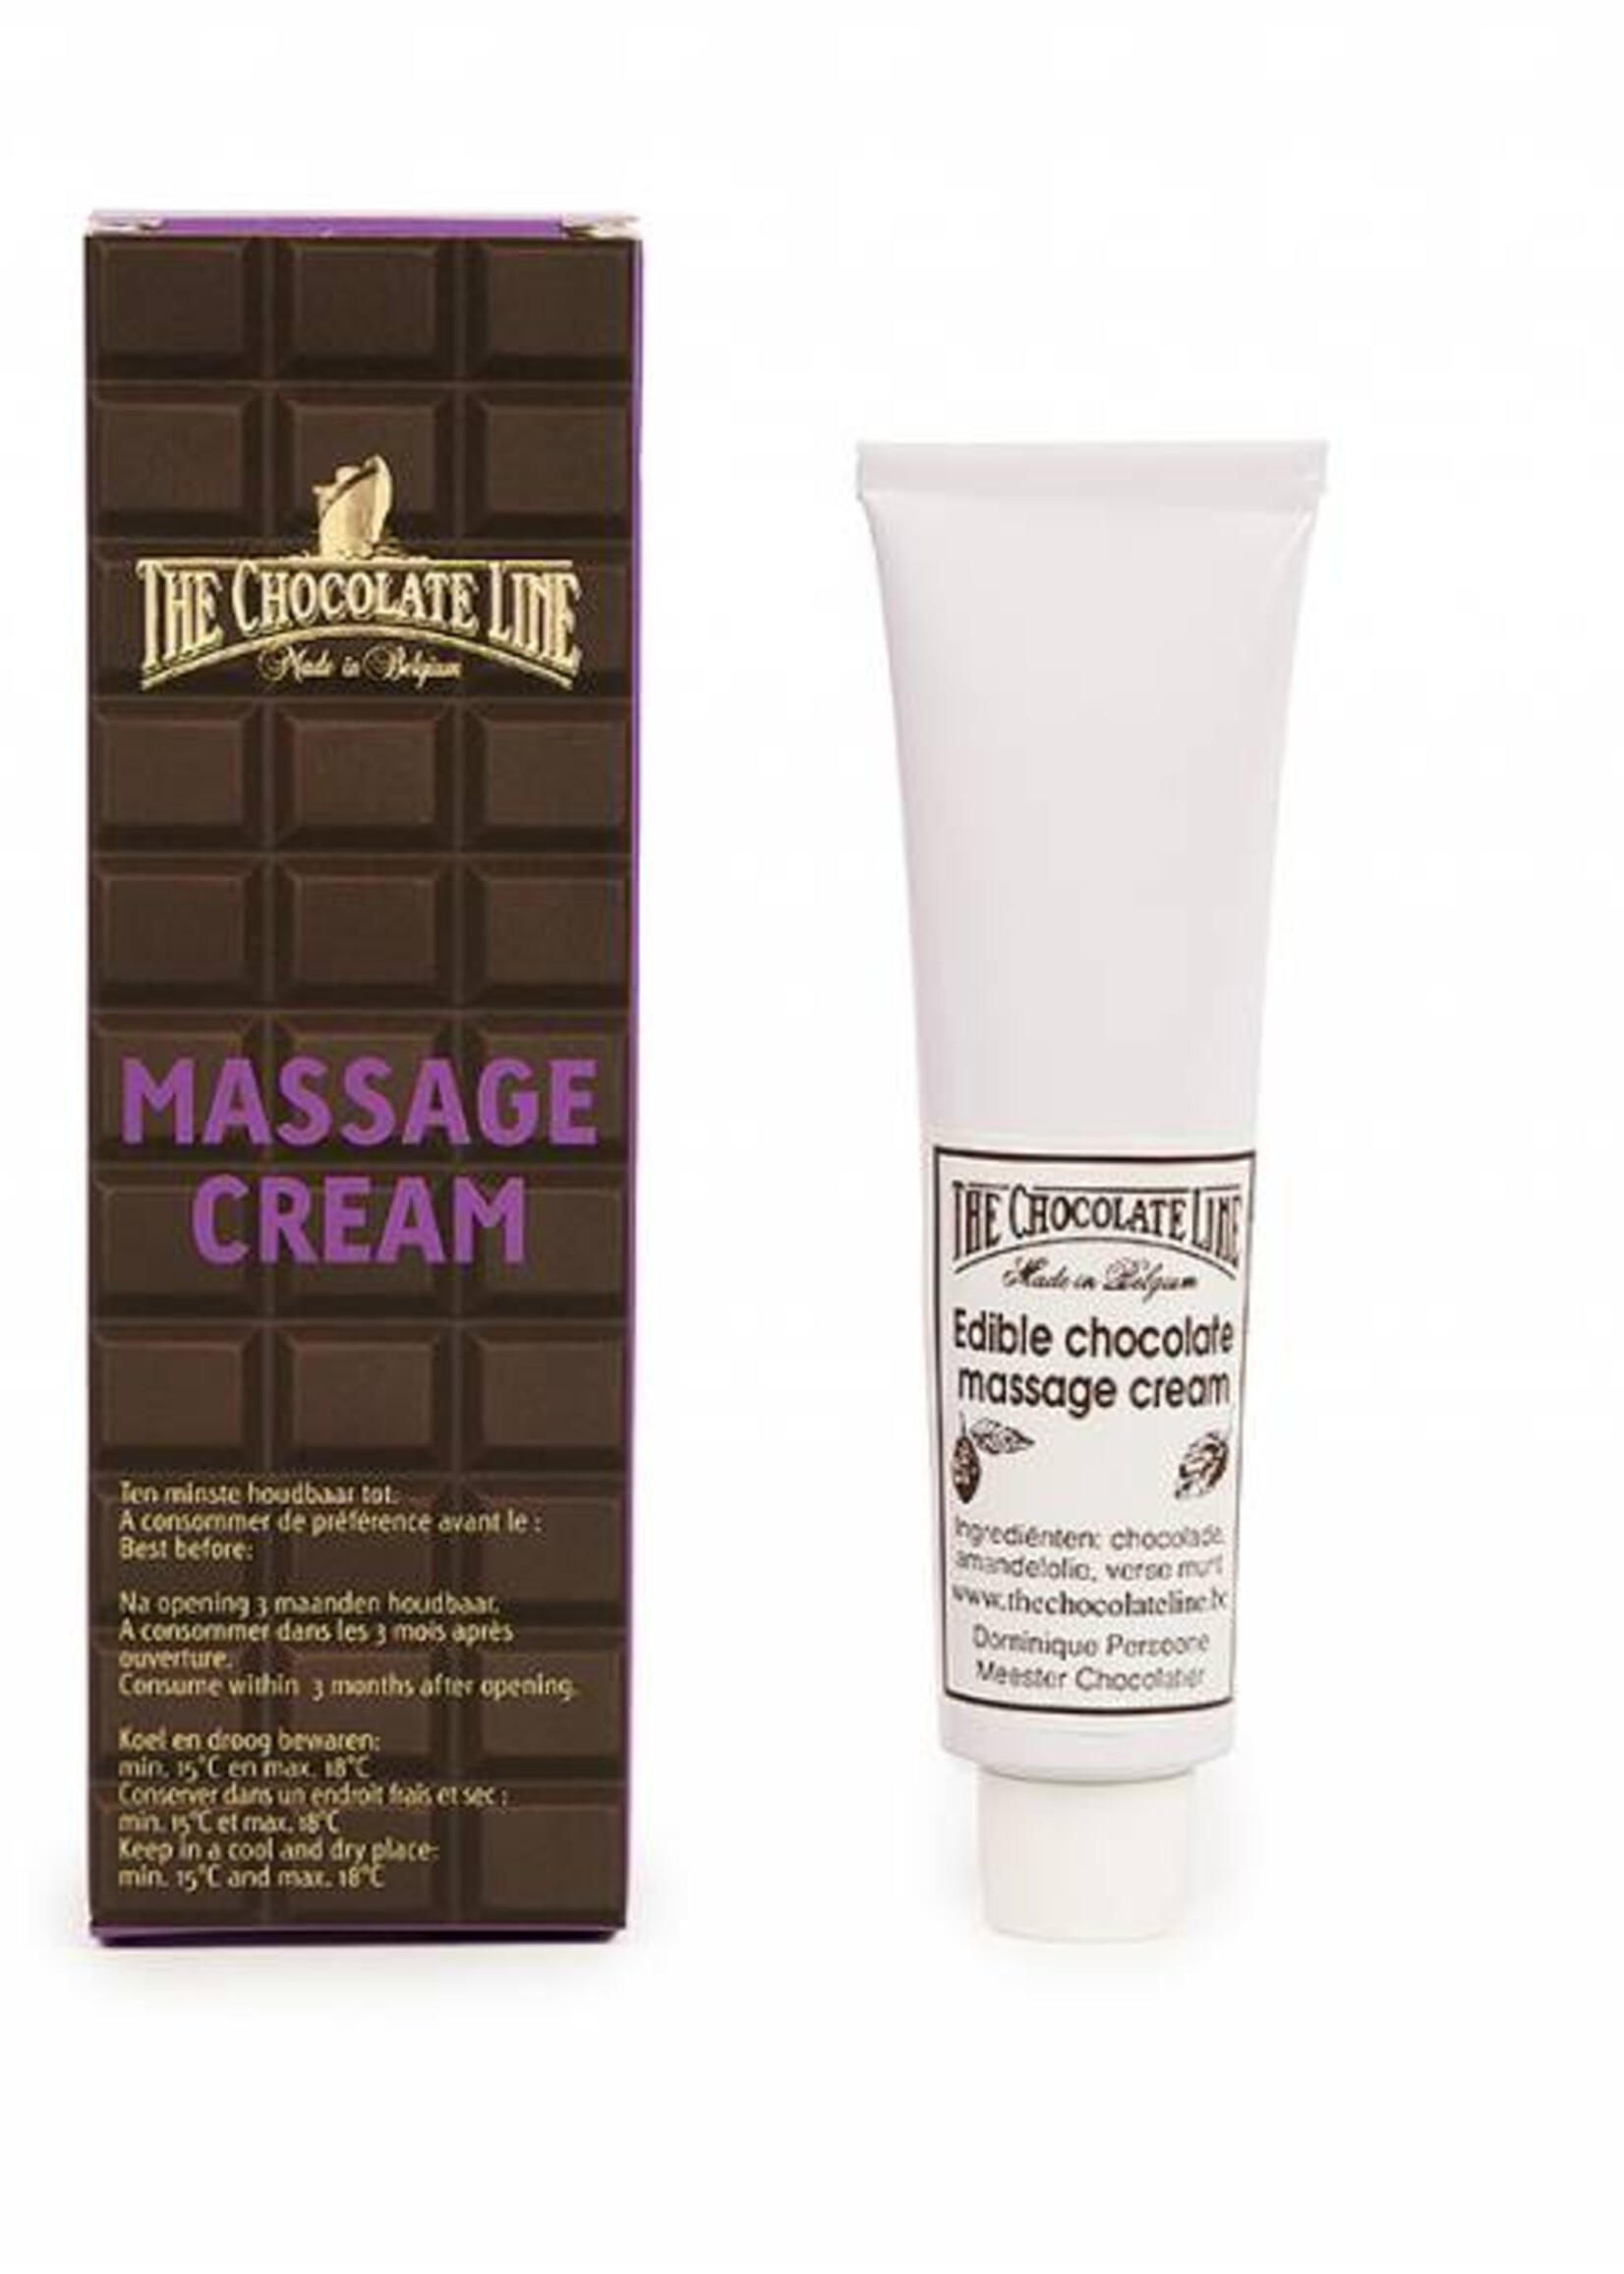 Massage cream with chocolate